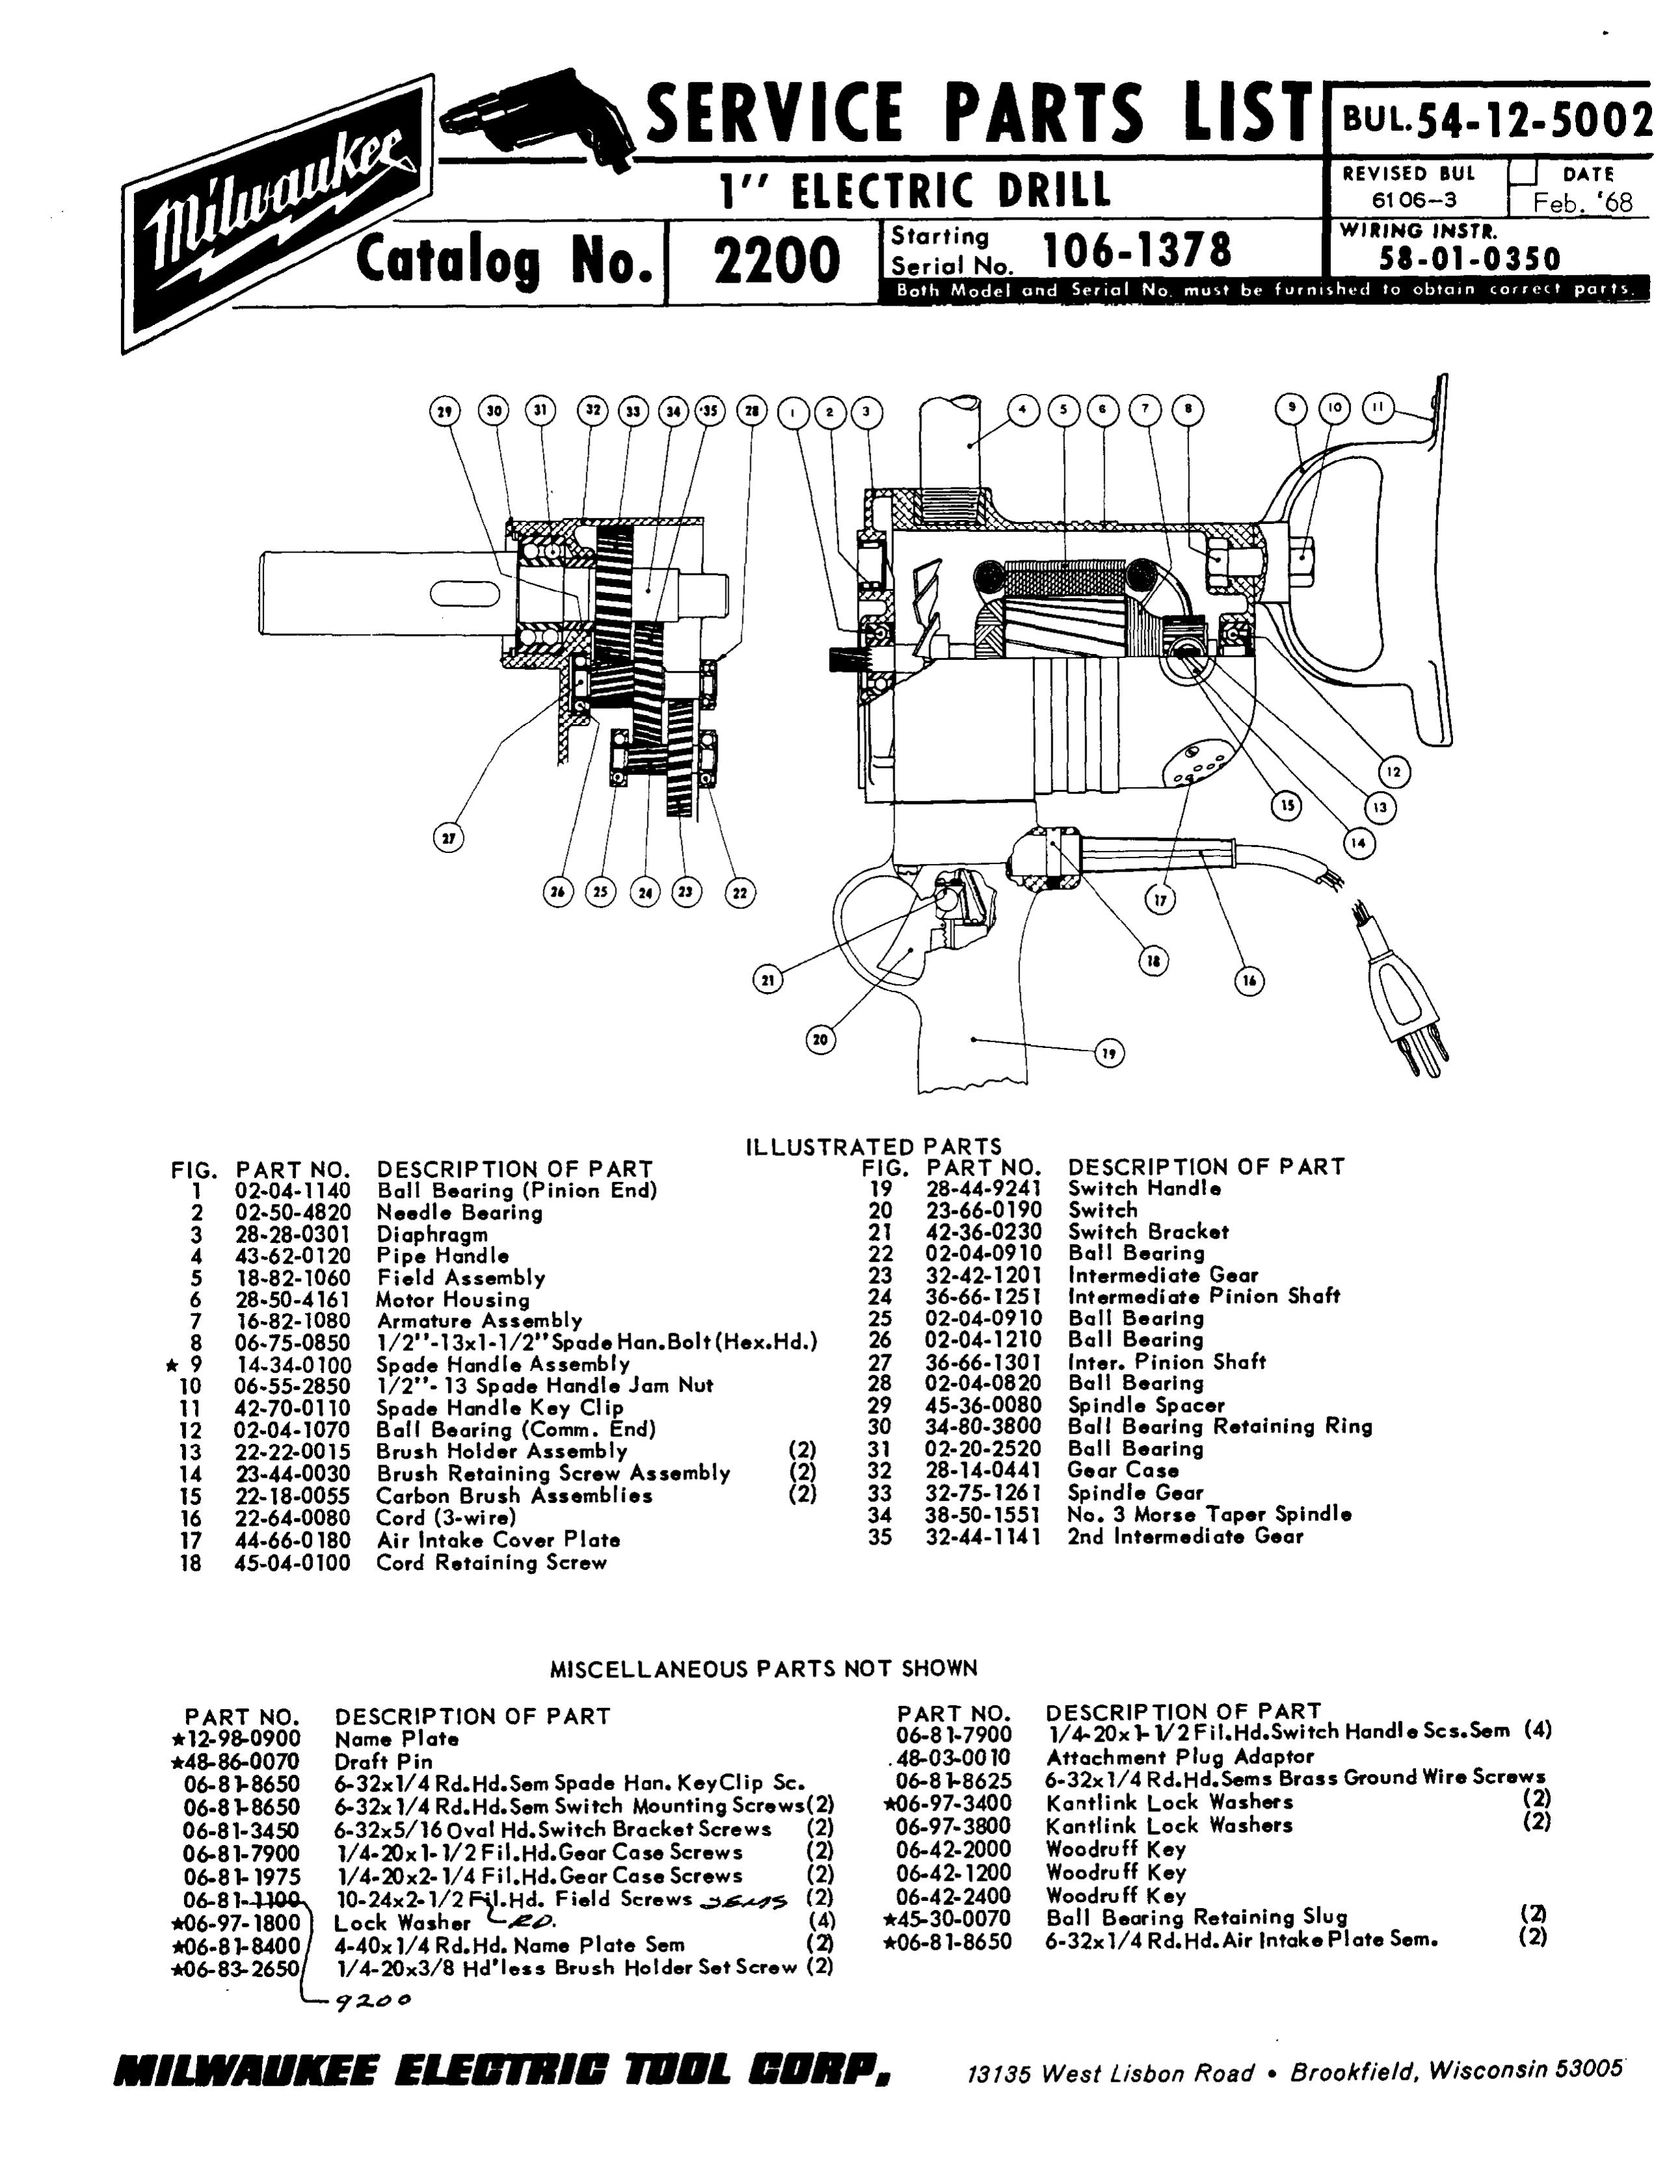 Milwaukee 06.55-2850 Drill User Manual